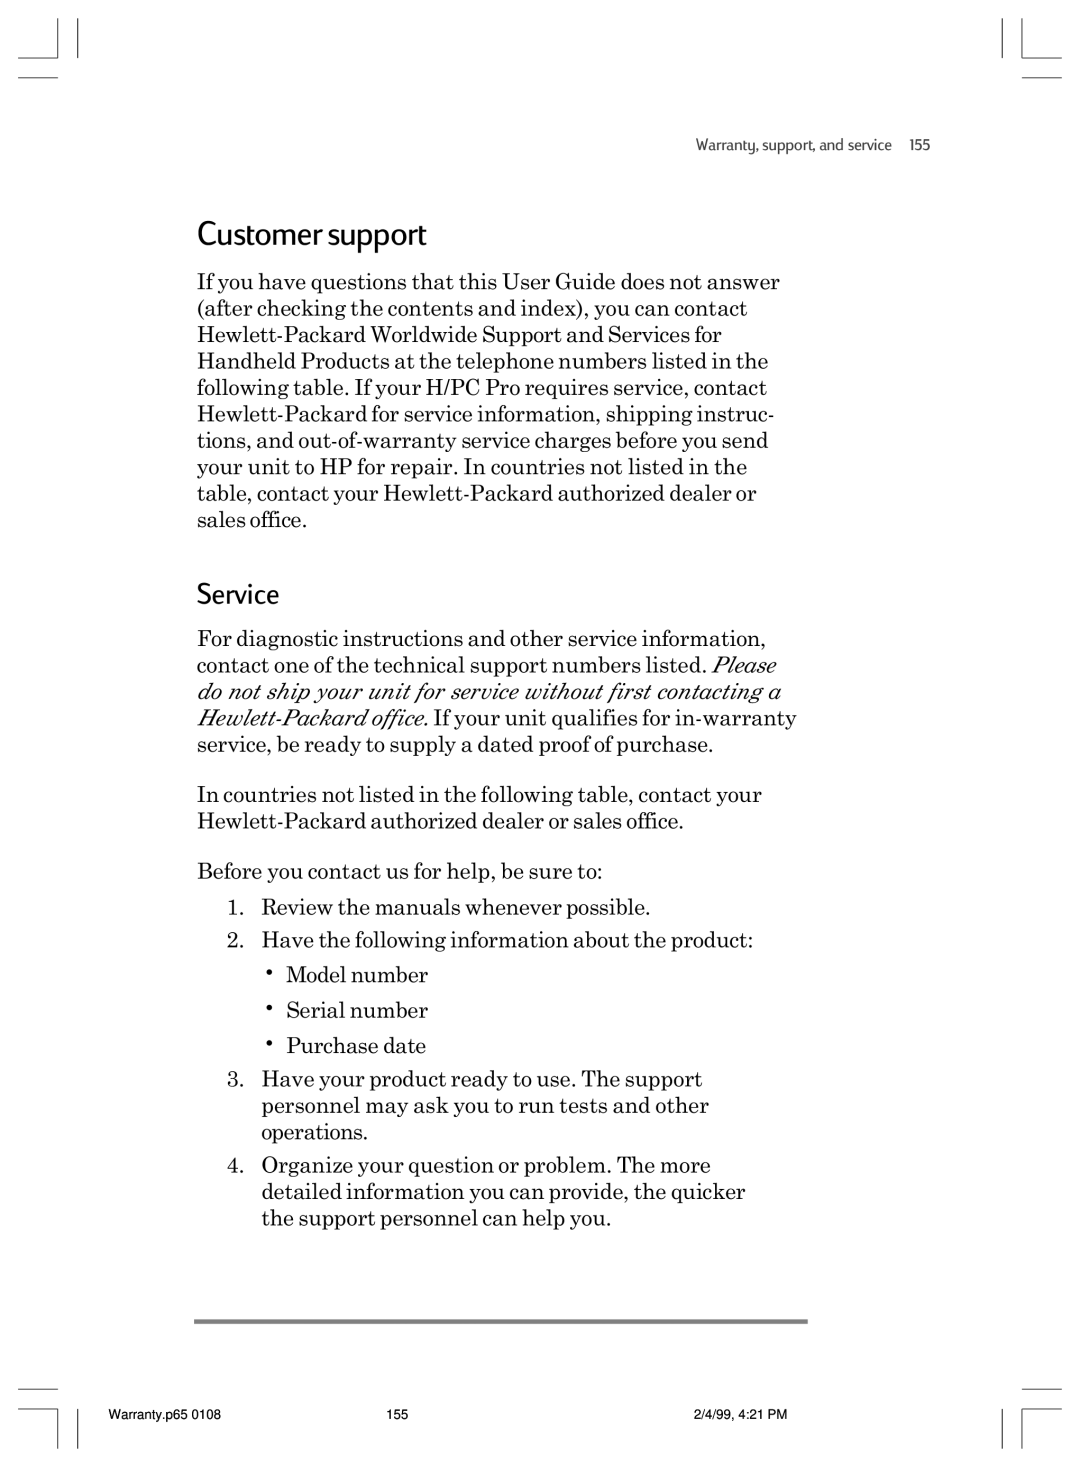 HP 820 E manual Customer support, Service 